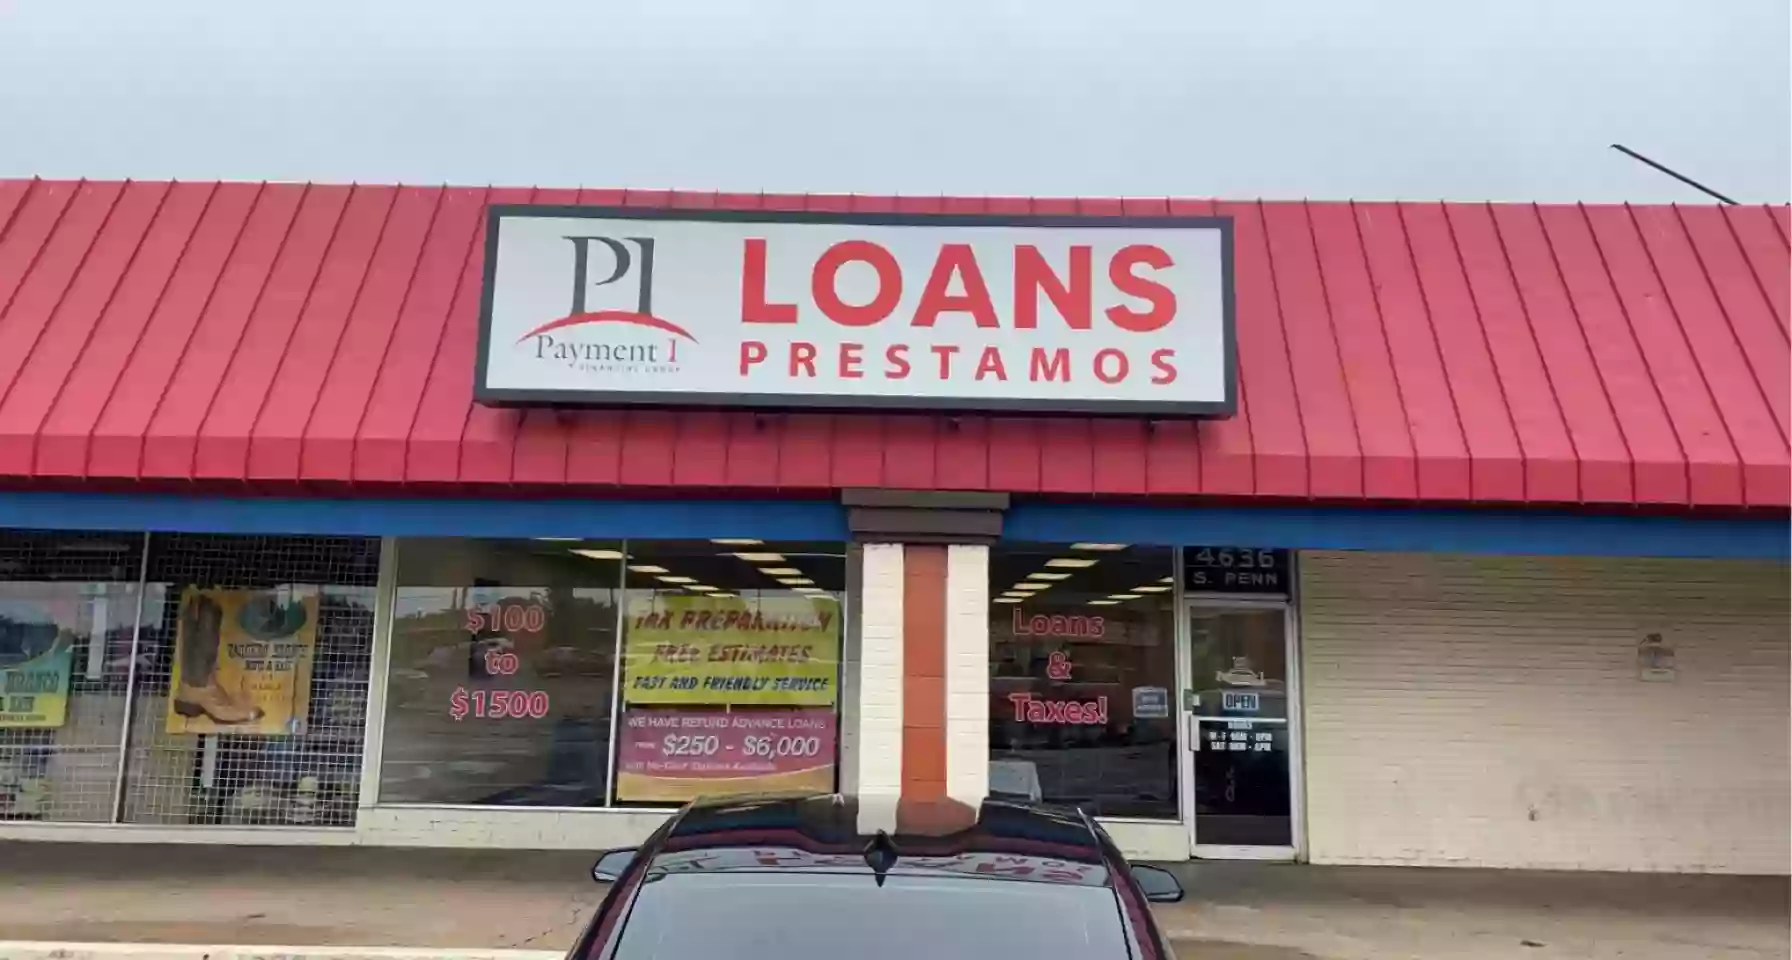 Payment 1 Loans - Oklahoma City